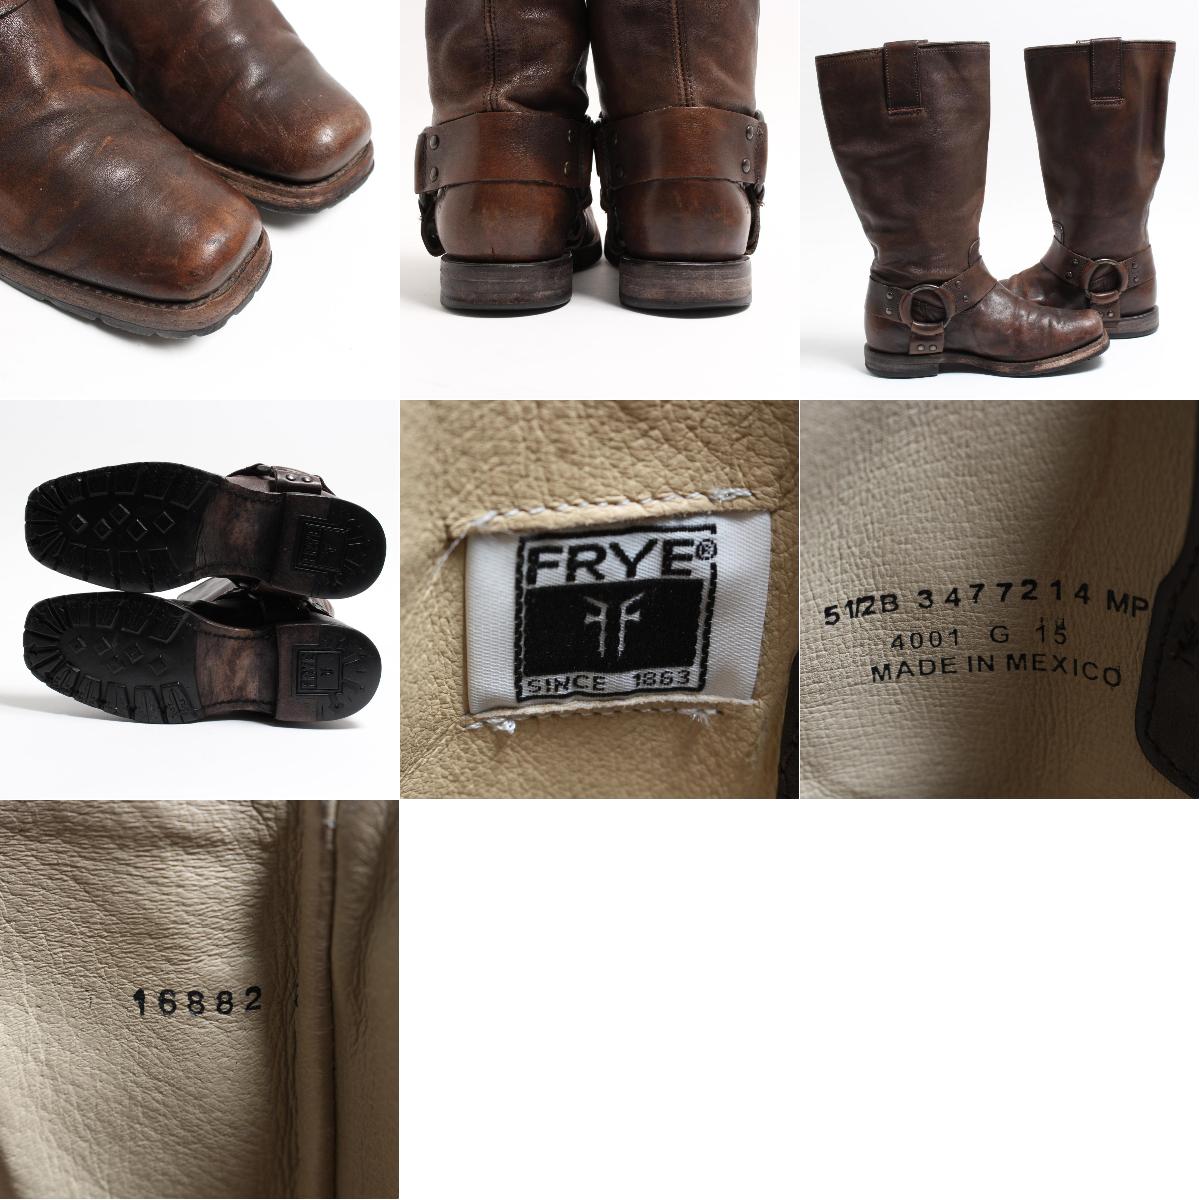 frye boots 4001